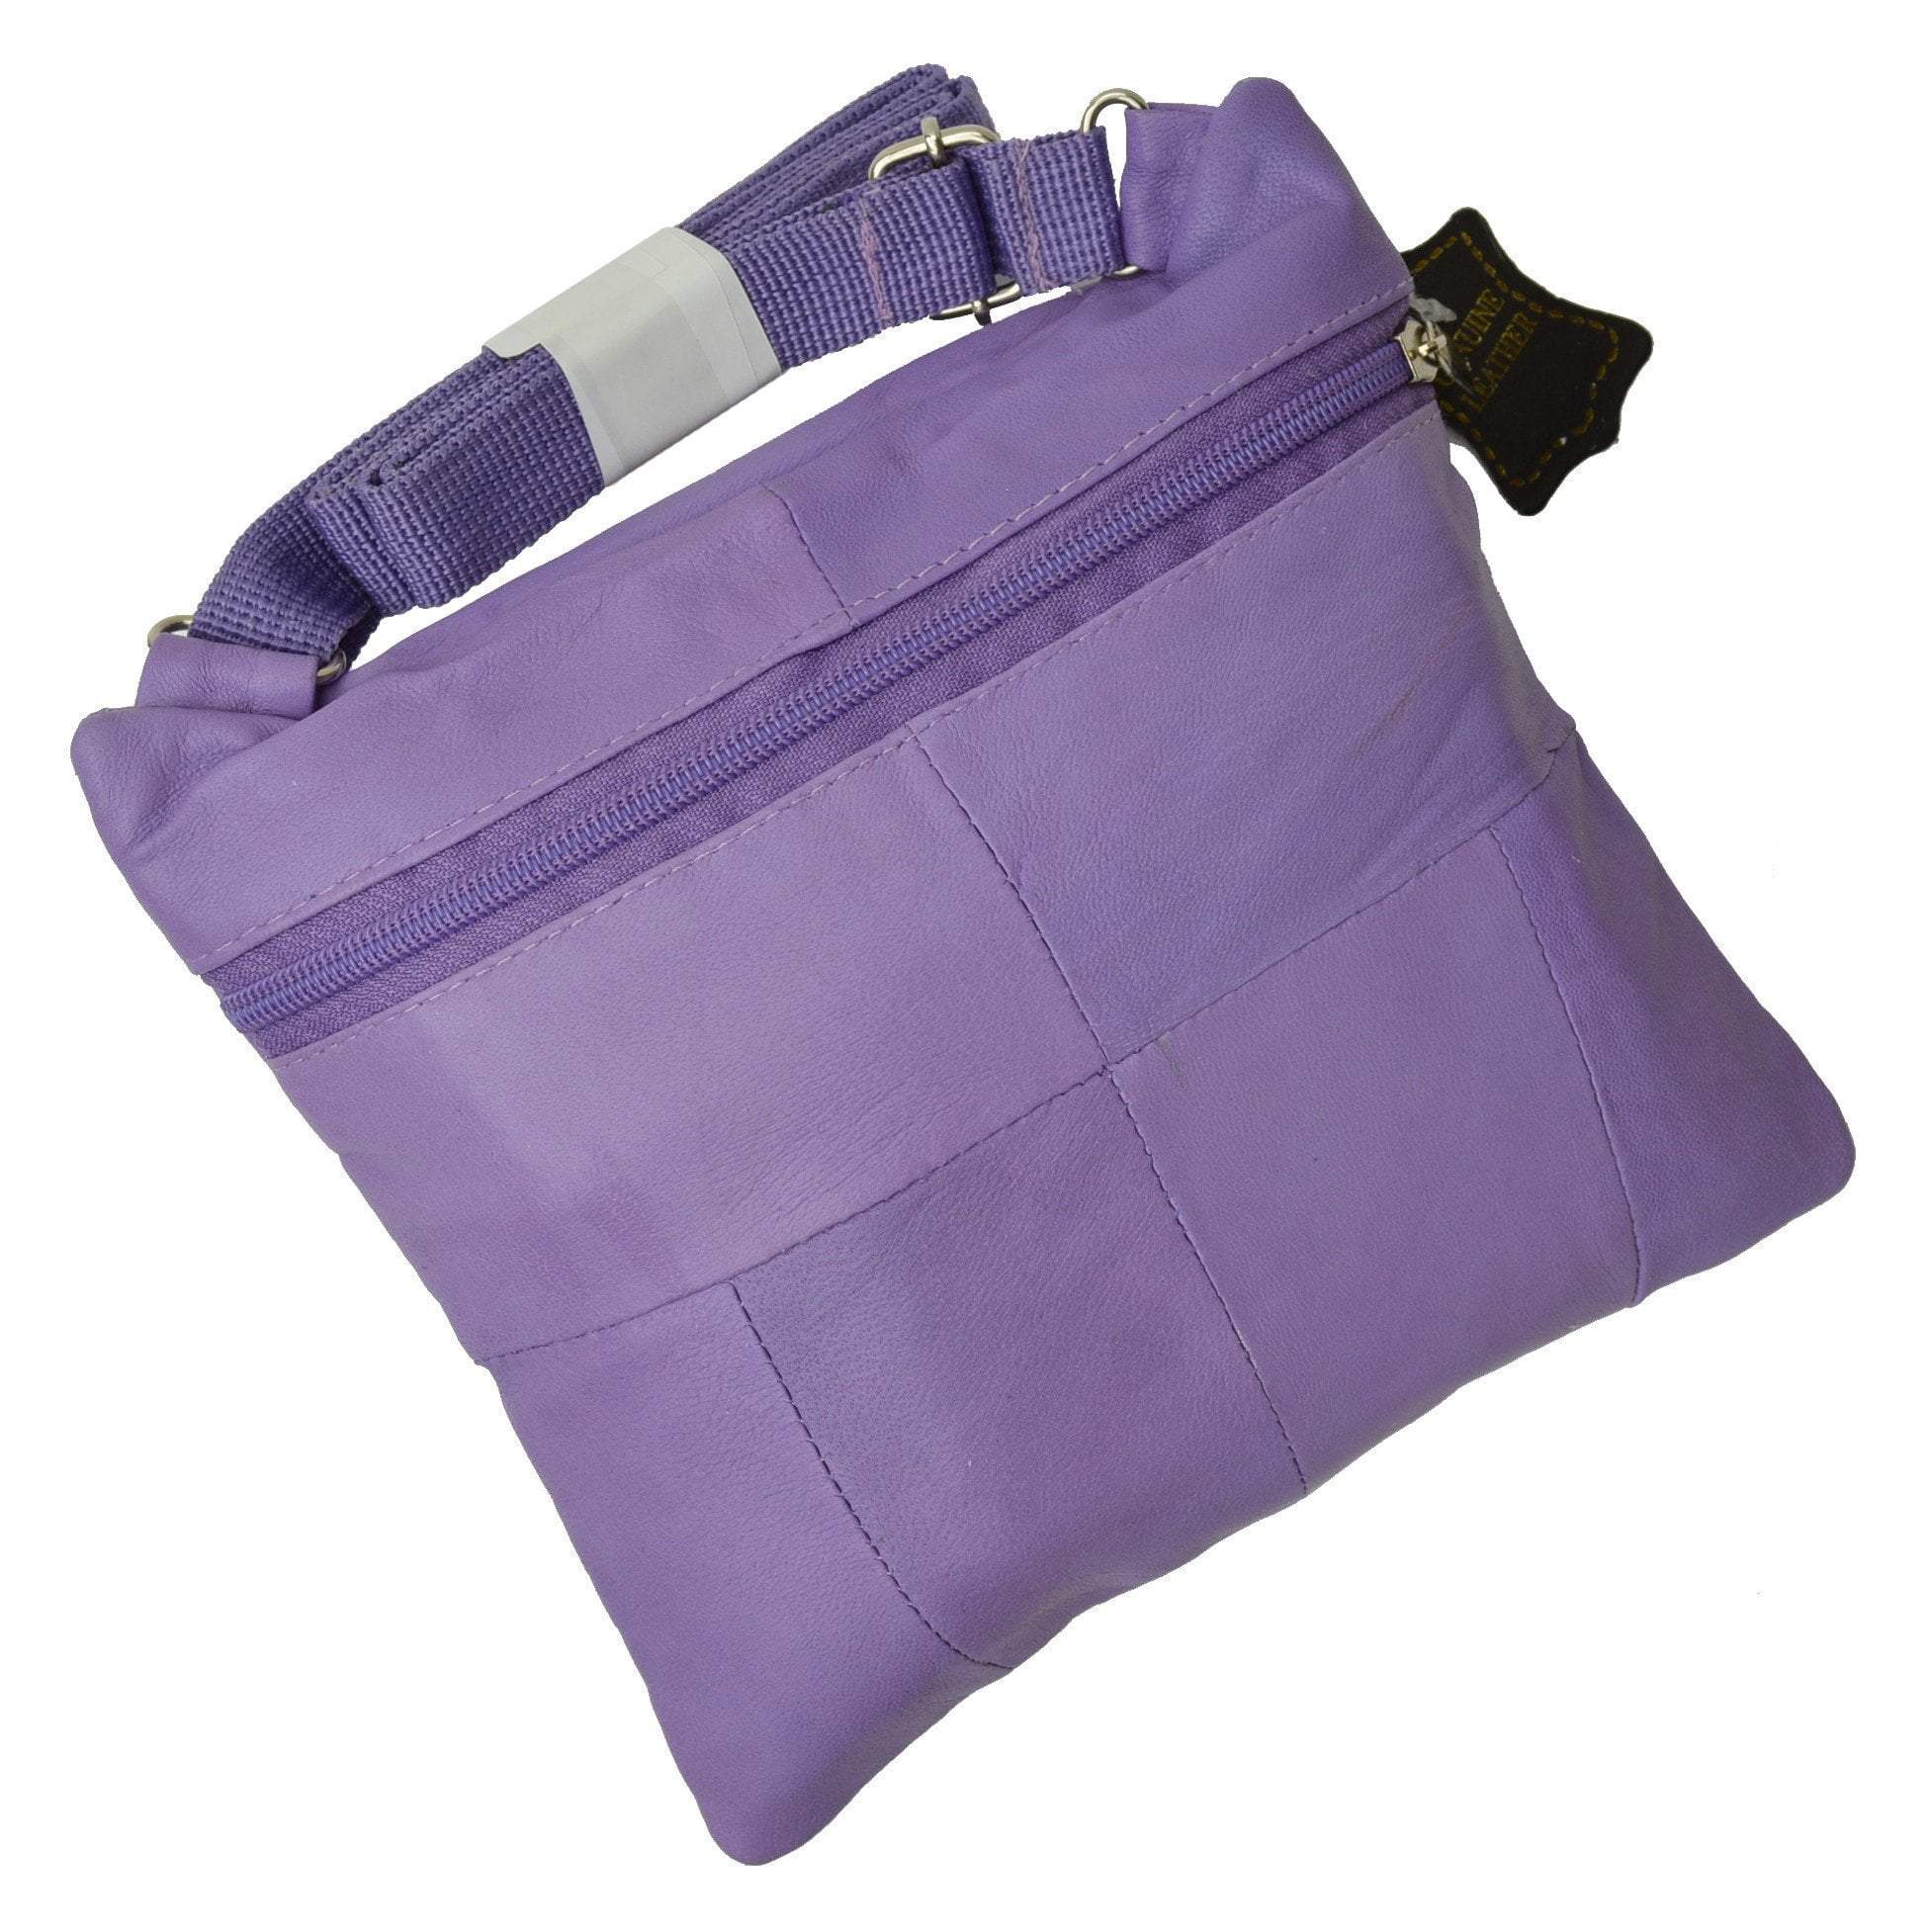 Manebí Raffia & Leather Summer Bag Mini - Cross-body Bag - Summer Purple with Turtle